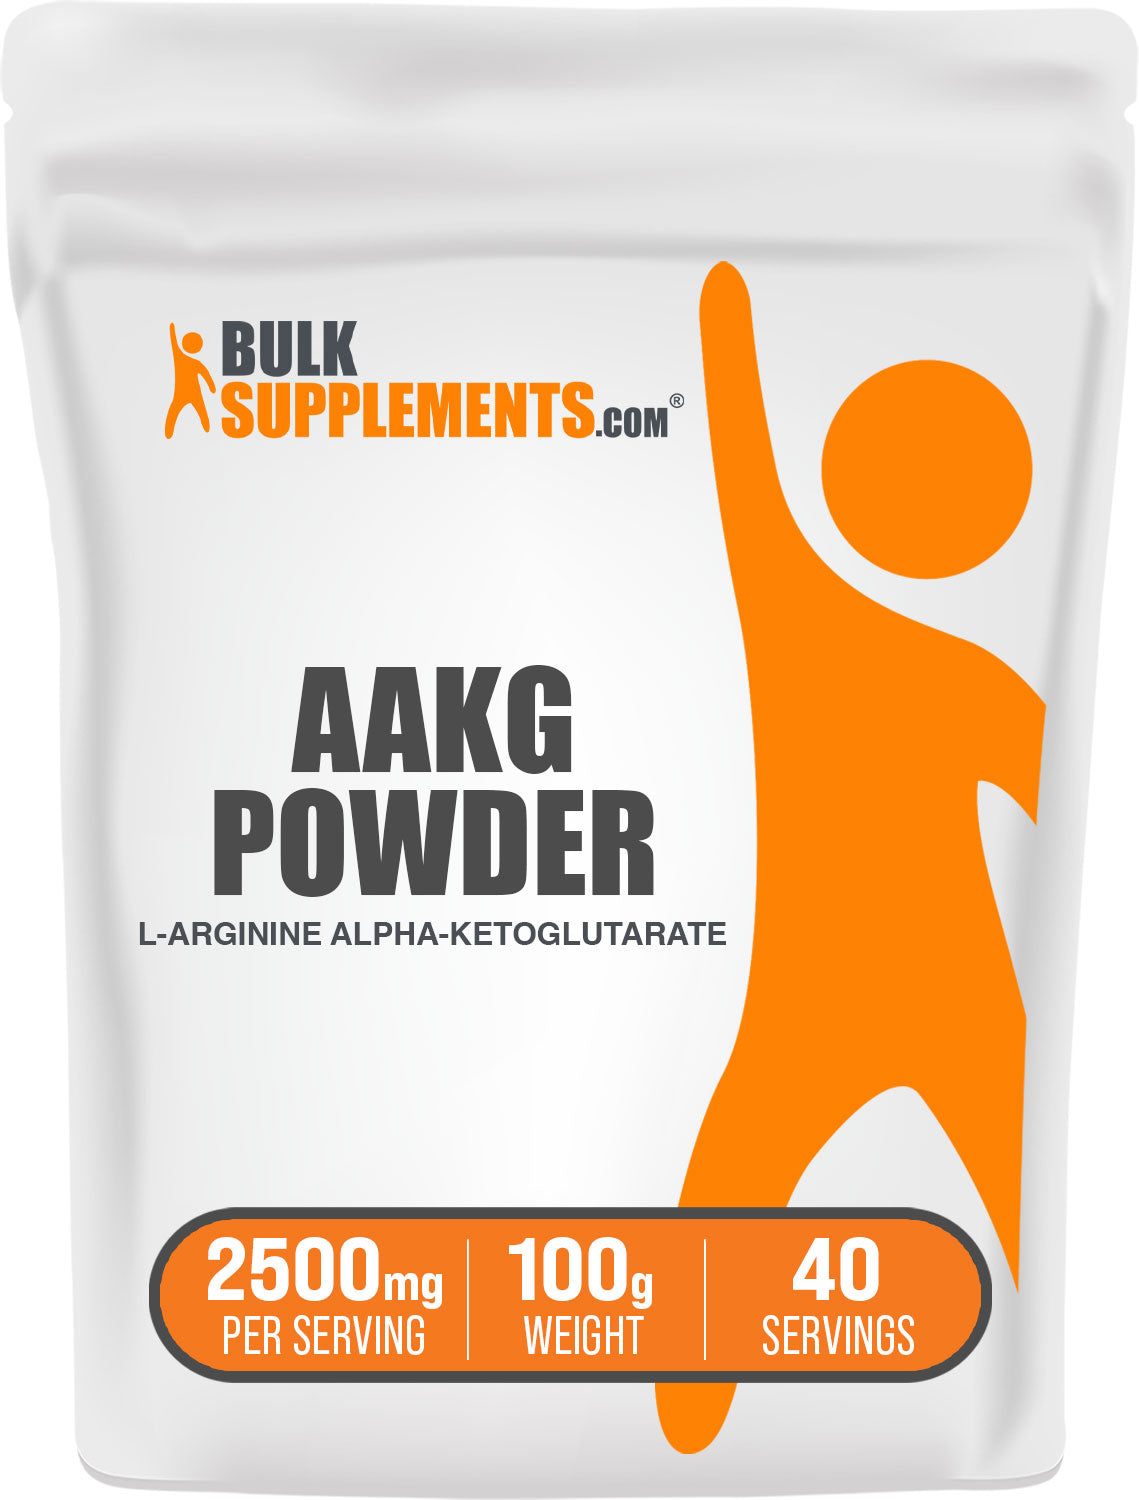 AAKG powder 100g bag